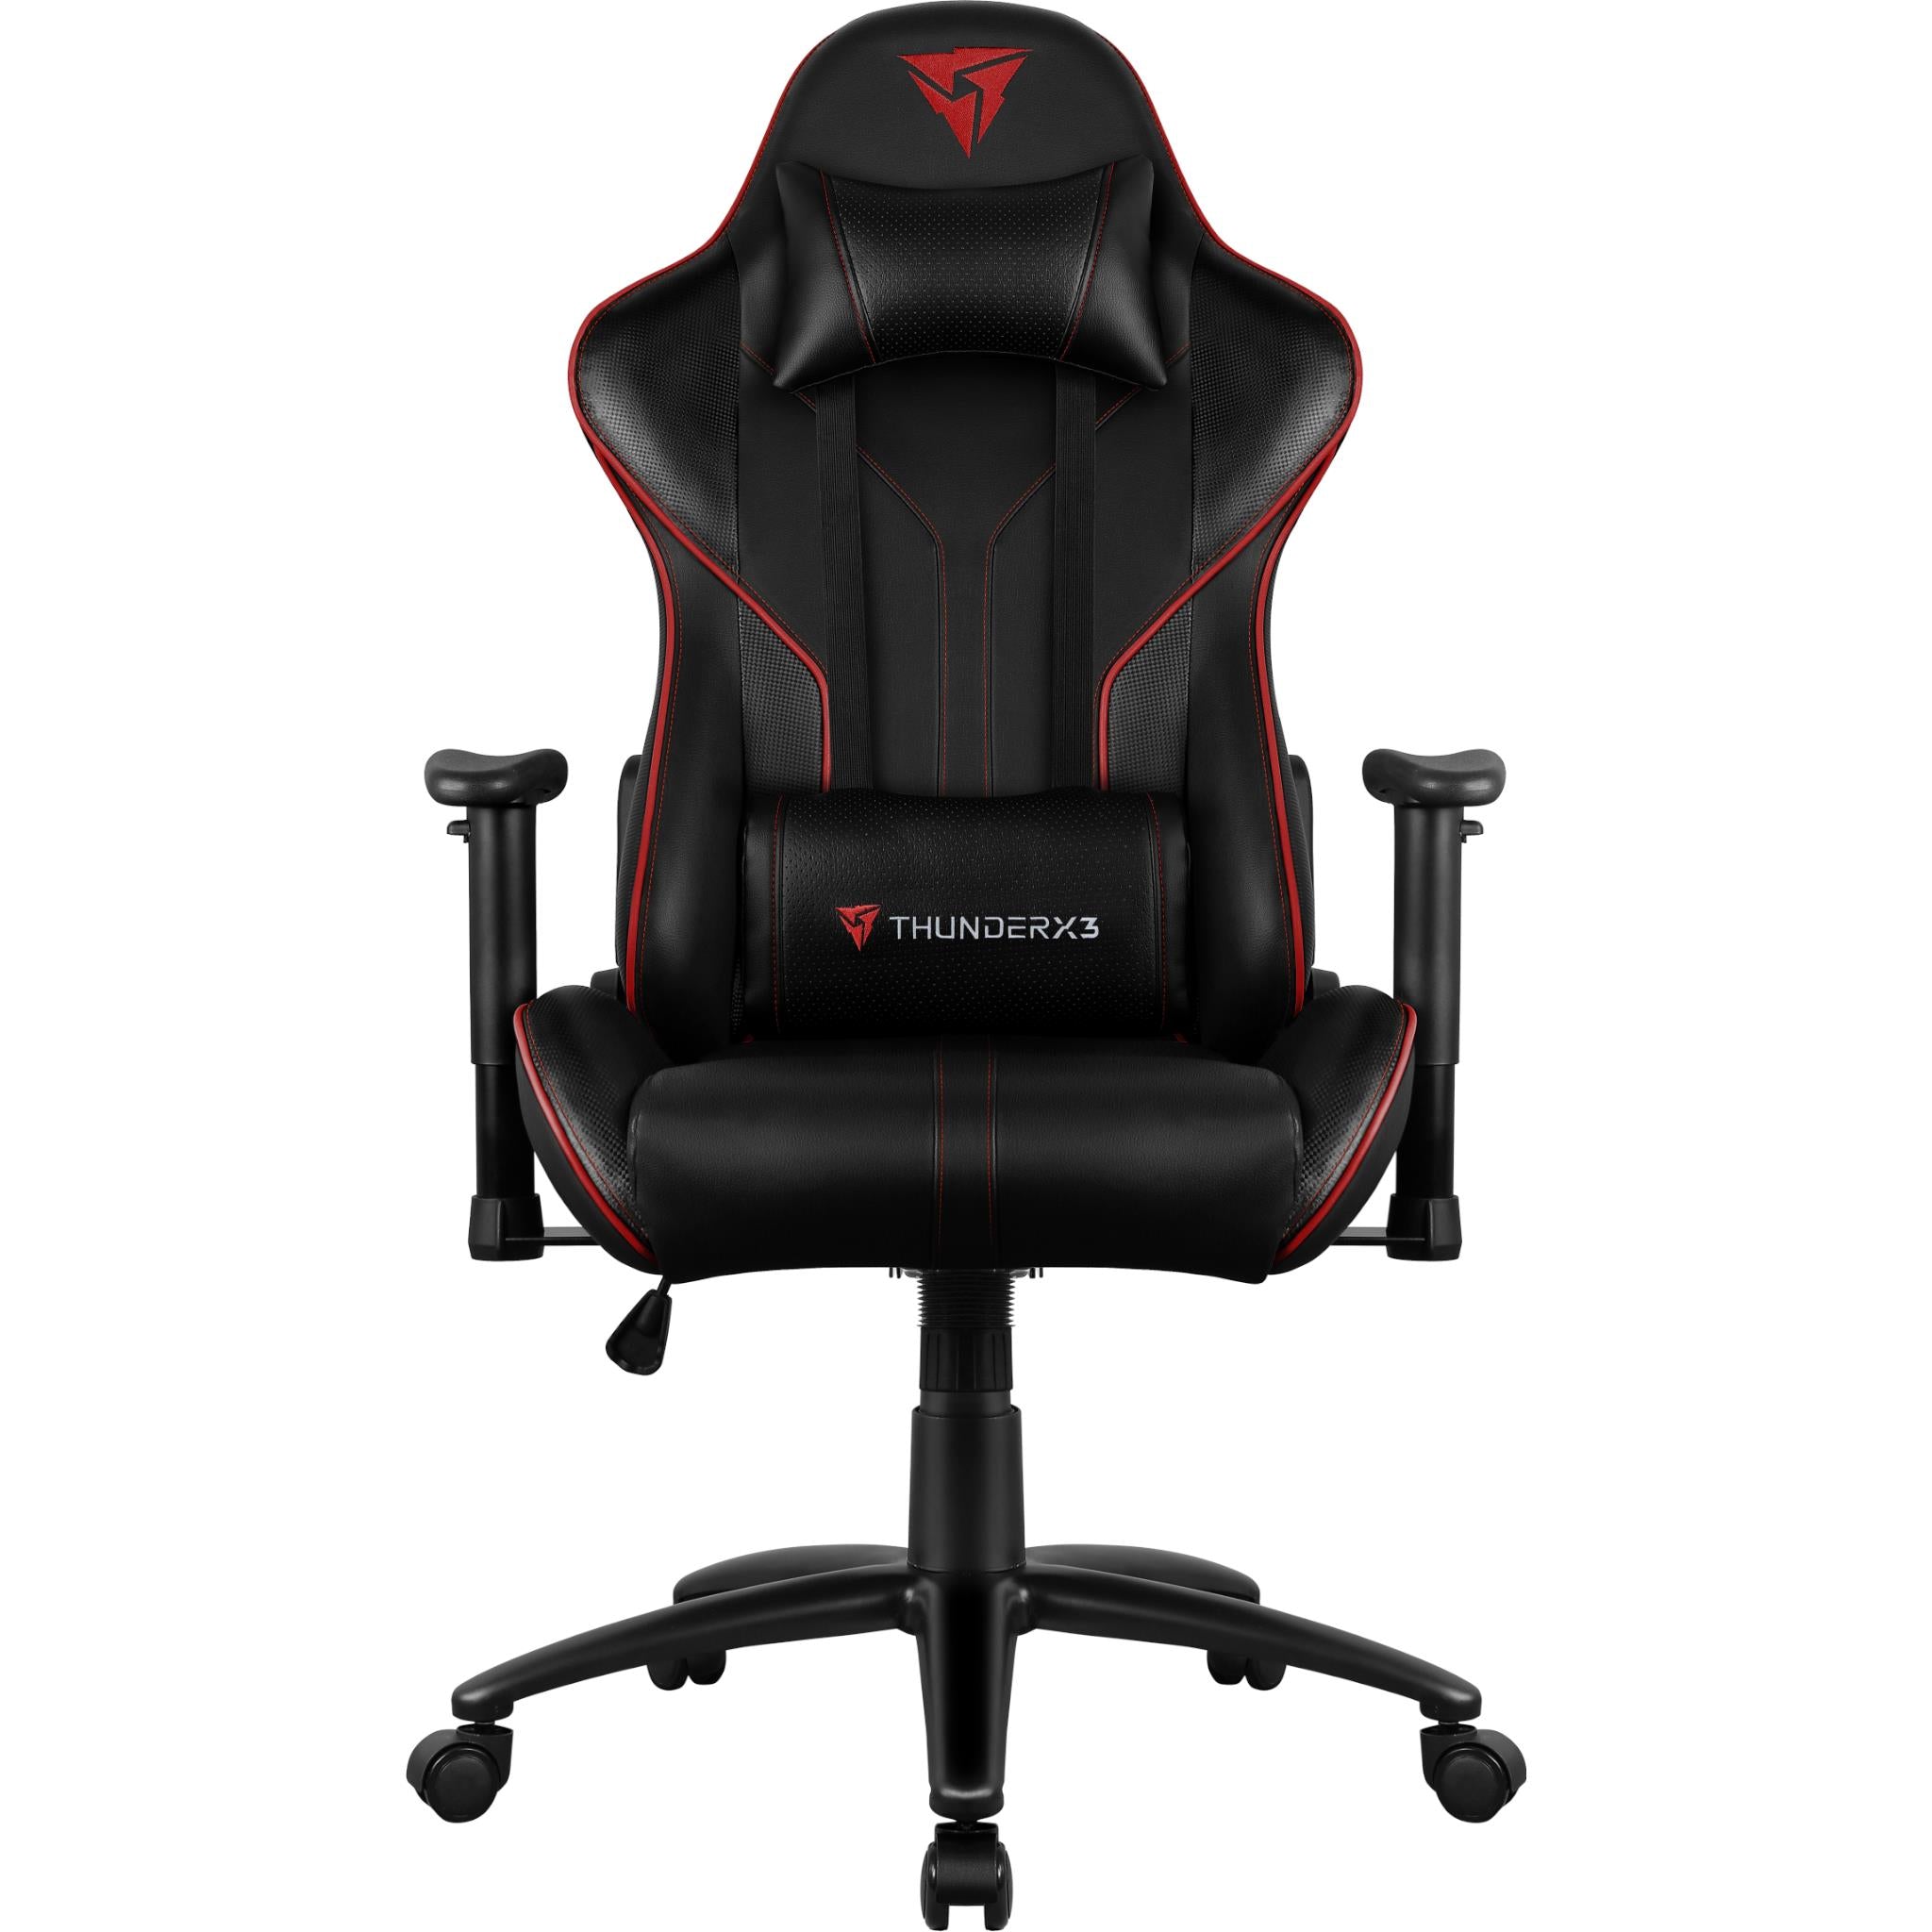 thunderx3 rc3-hex rgb colorlighting gaming chair (black/red)